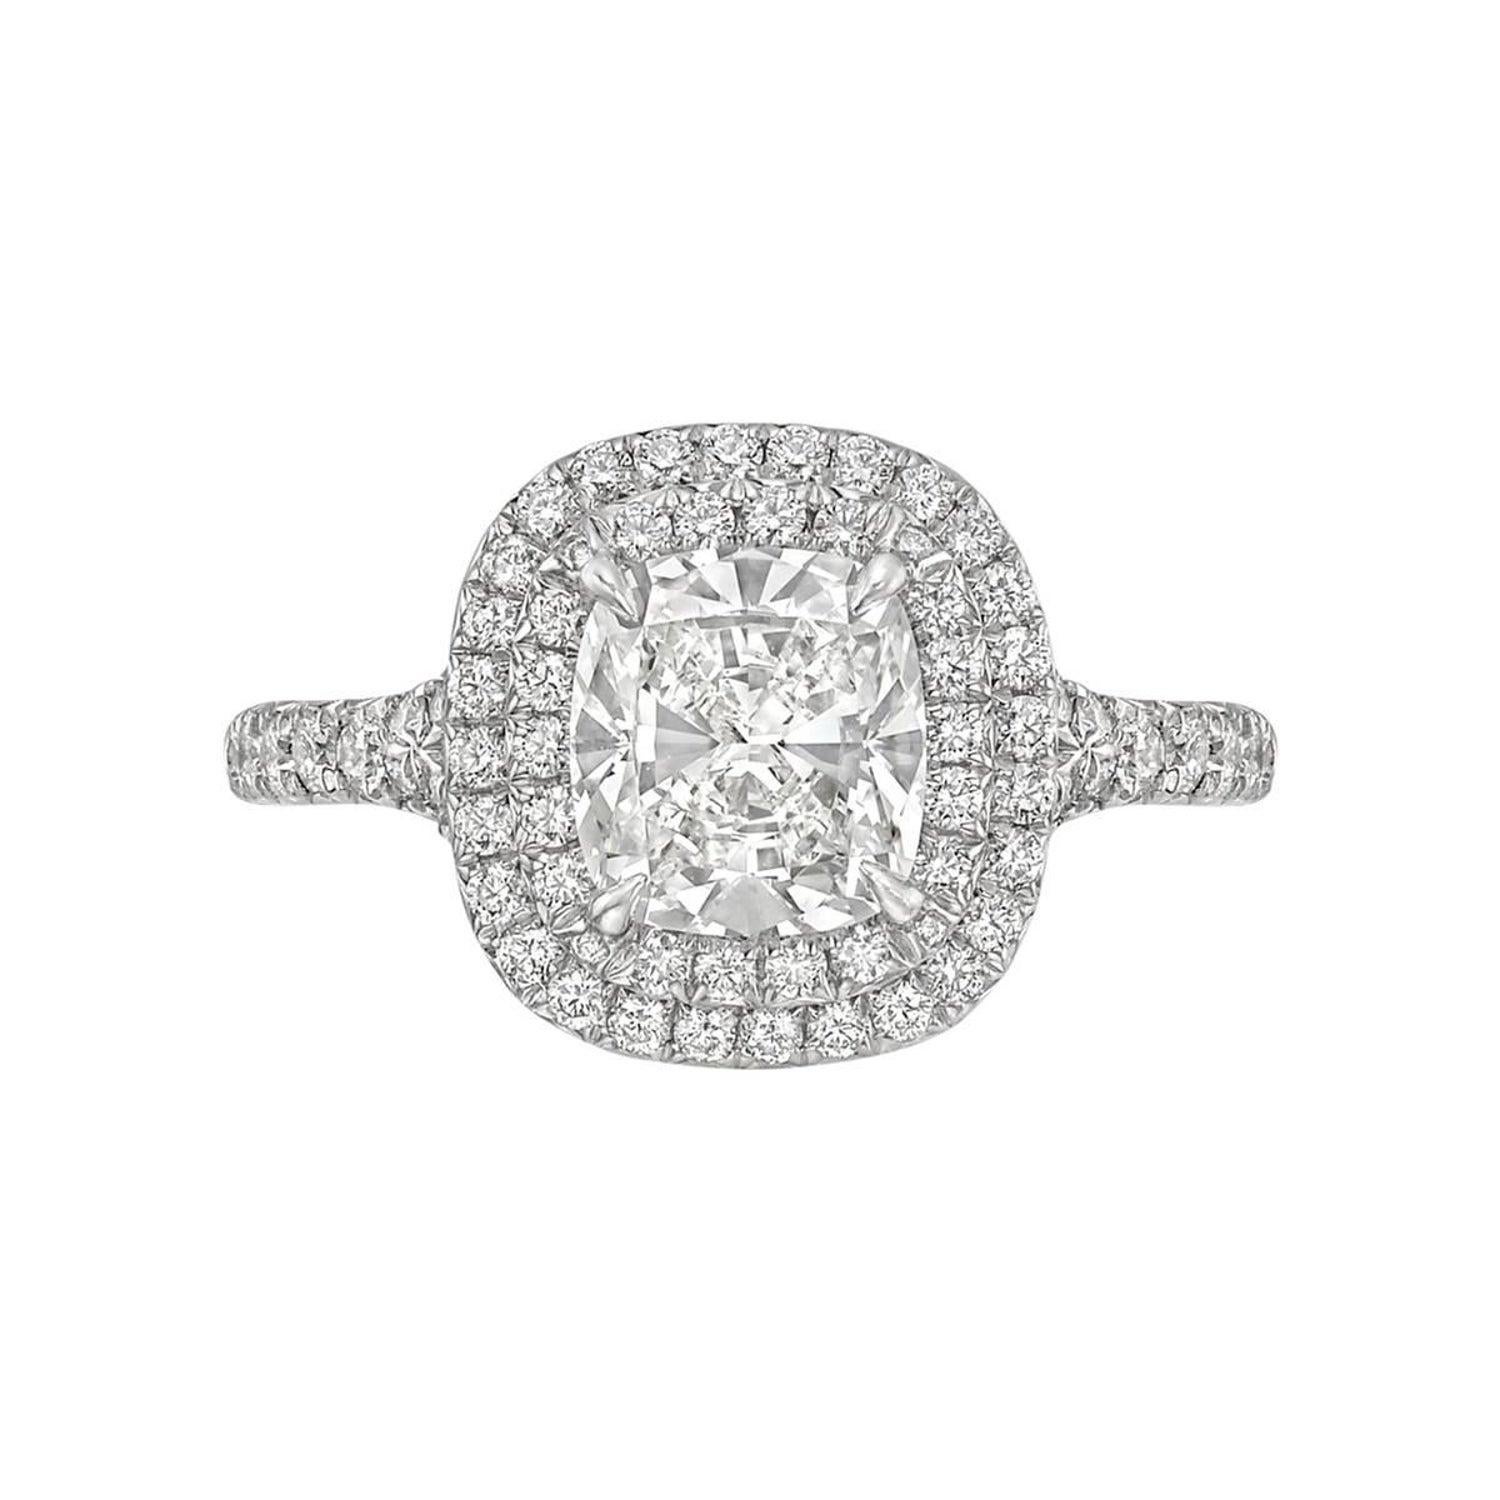 Tiffany & Co. Soleste Cushion Diamond 1.30 Carat Engagement Ring Retail $14, 200 5